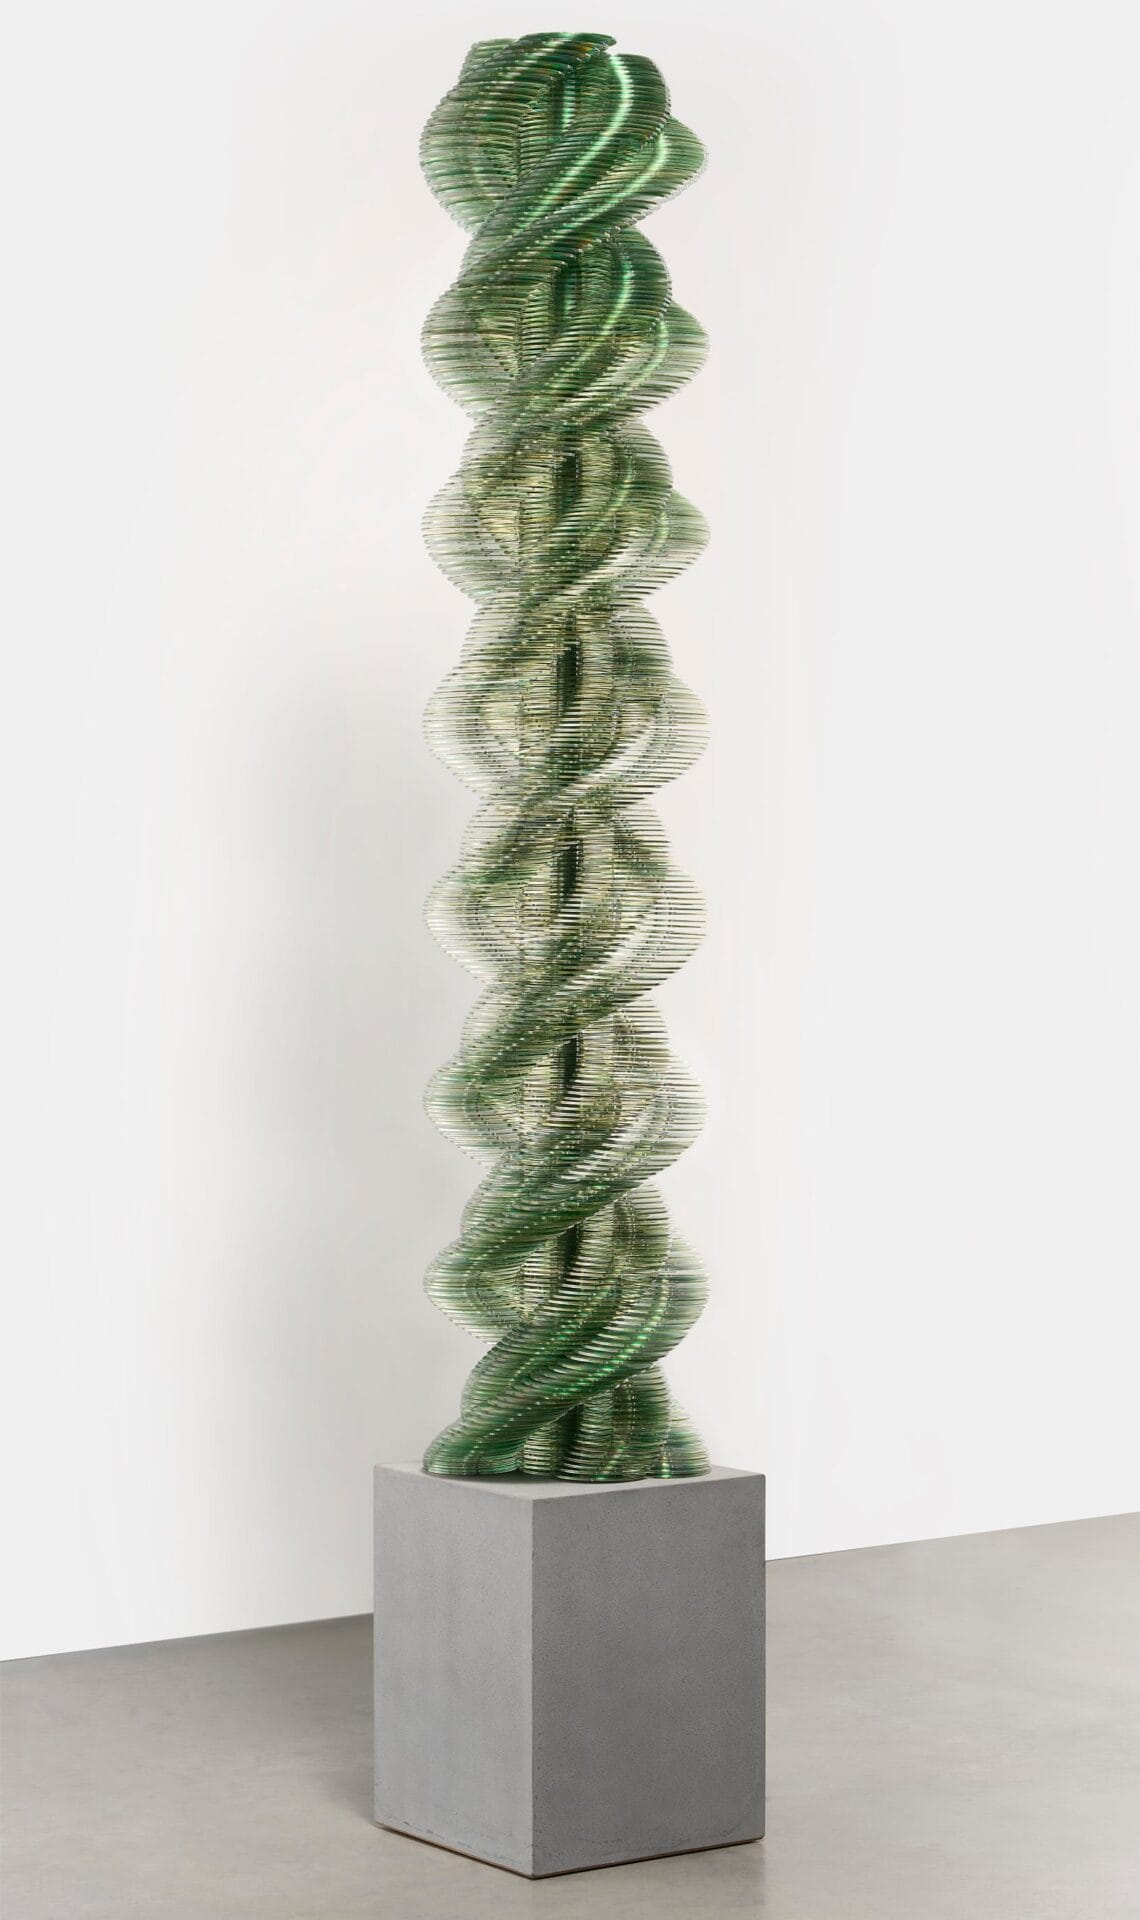 a twisting green sculpture on a concrete pedestal